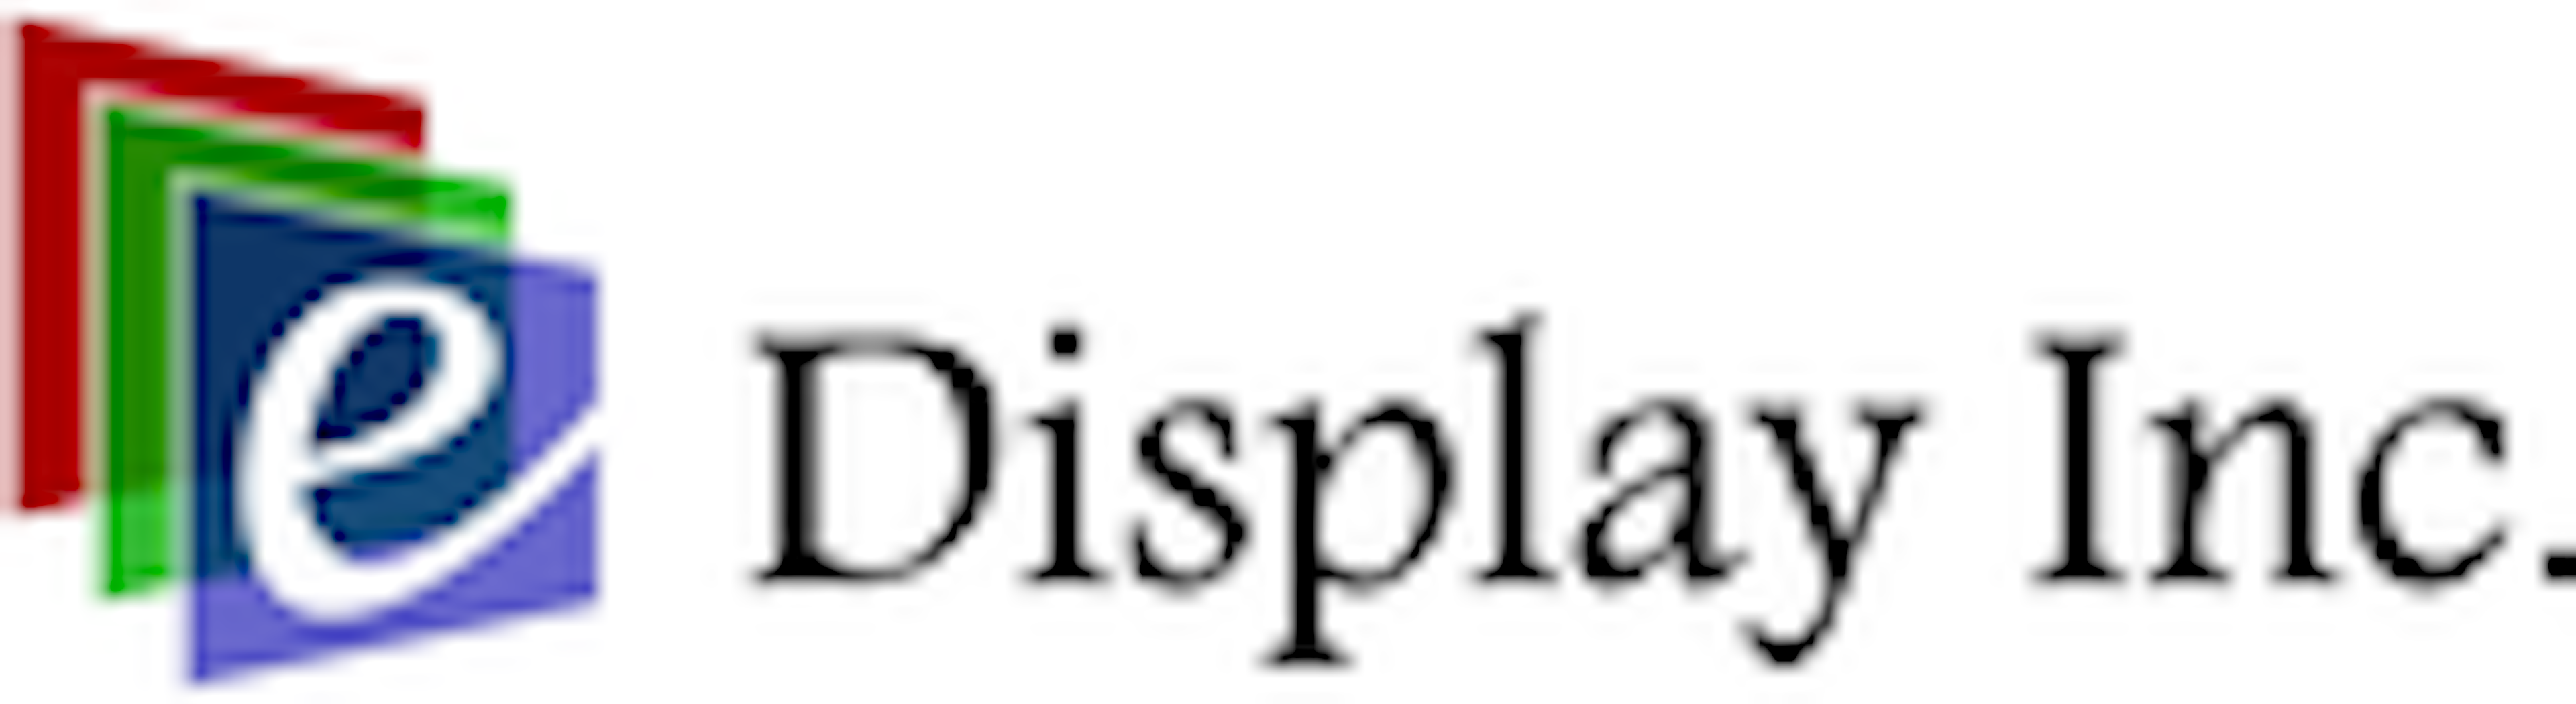 E Display Digital Signage Logo